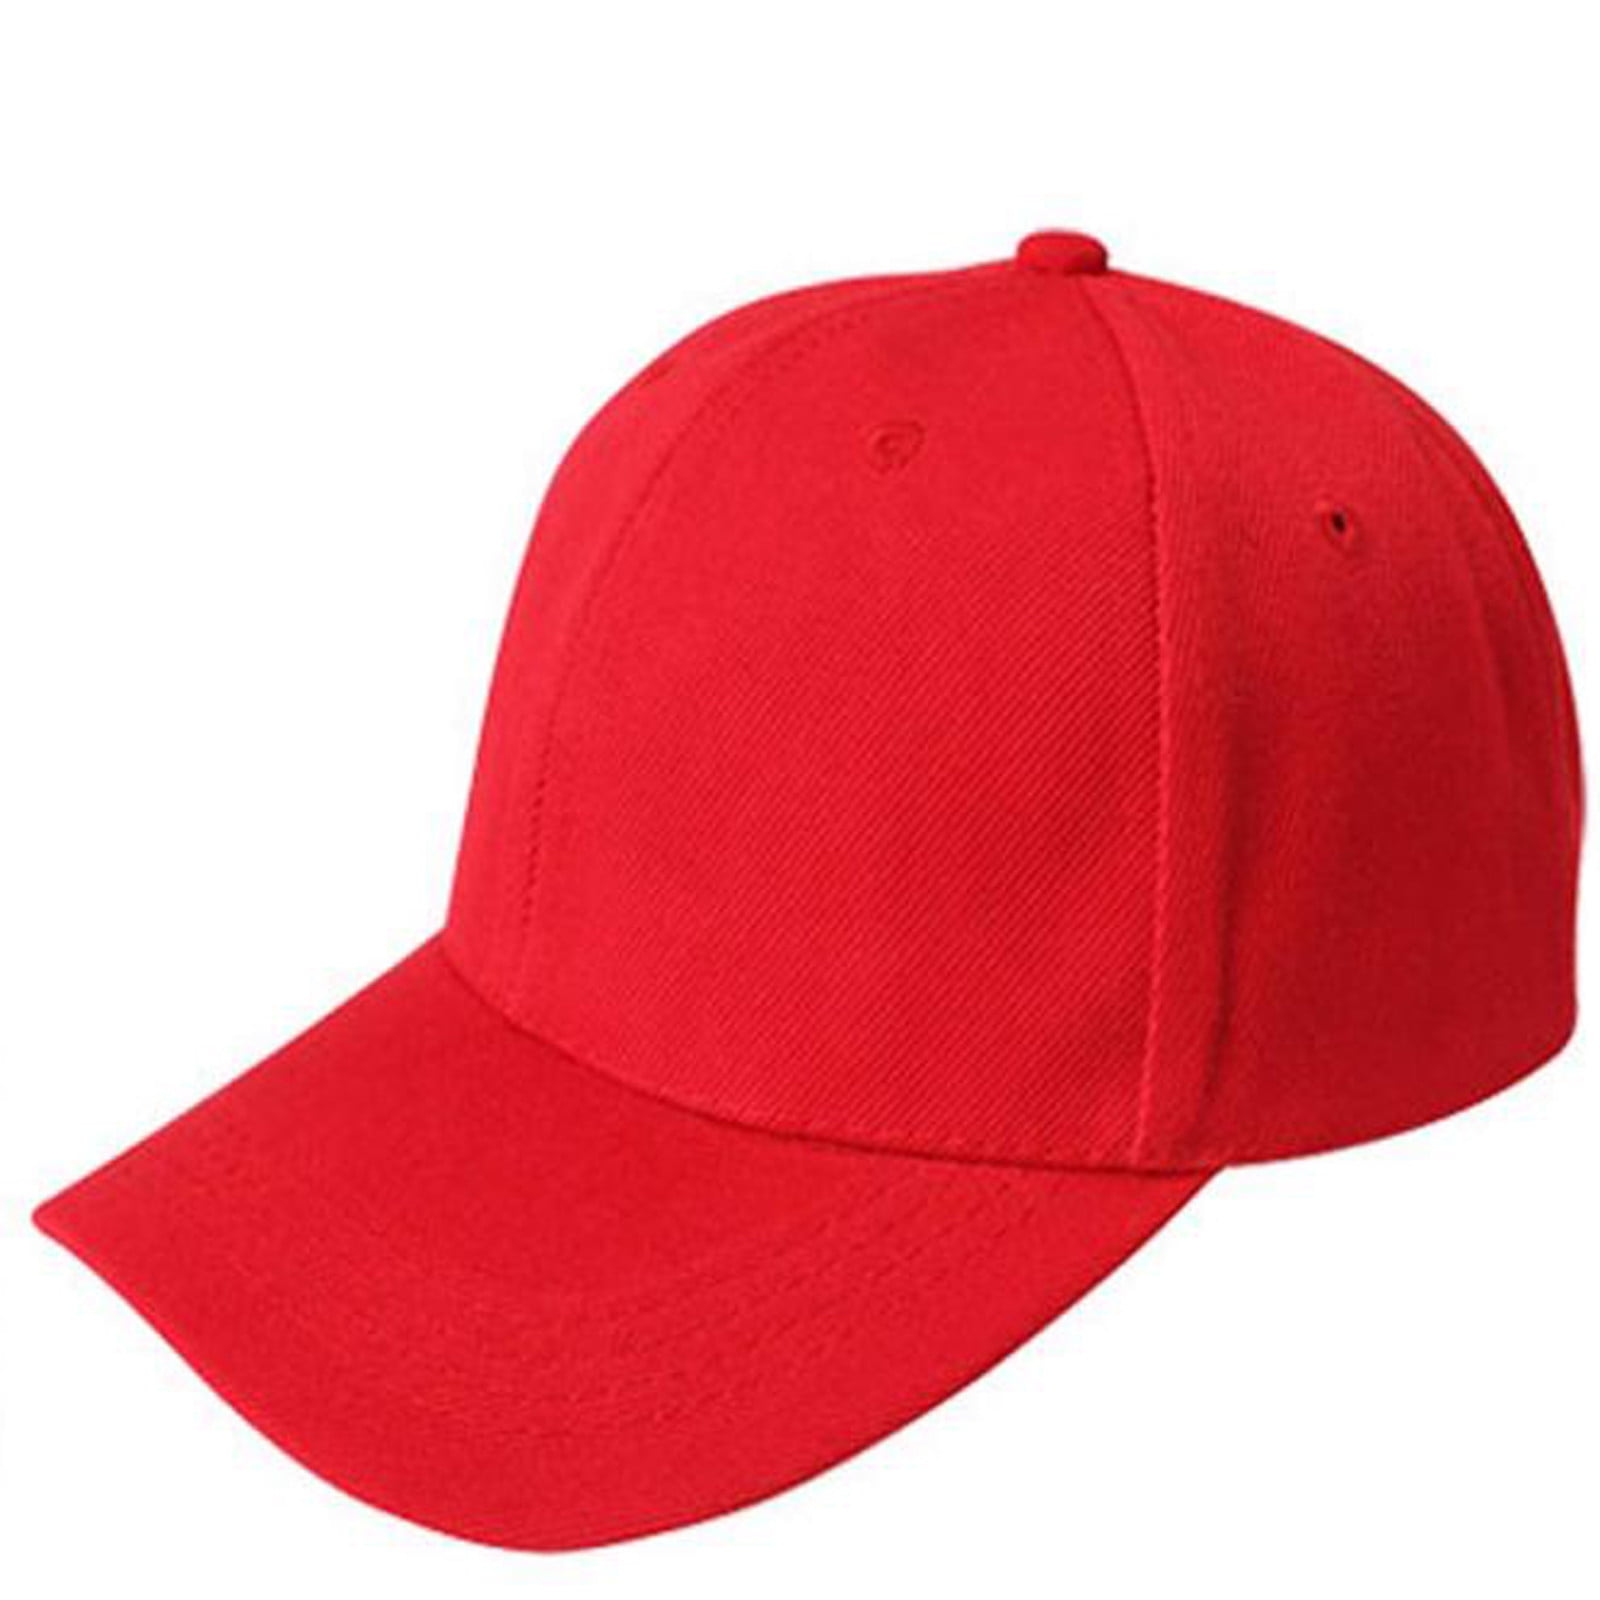 Baseball Cap Ladies Mens Solid Hat Female Casual Hat Truck Driver Mesh Blank Shade Baseball Cap Adjustable